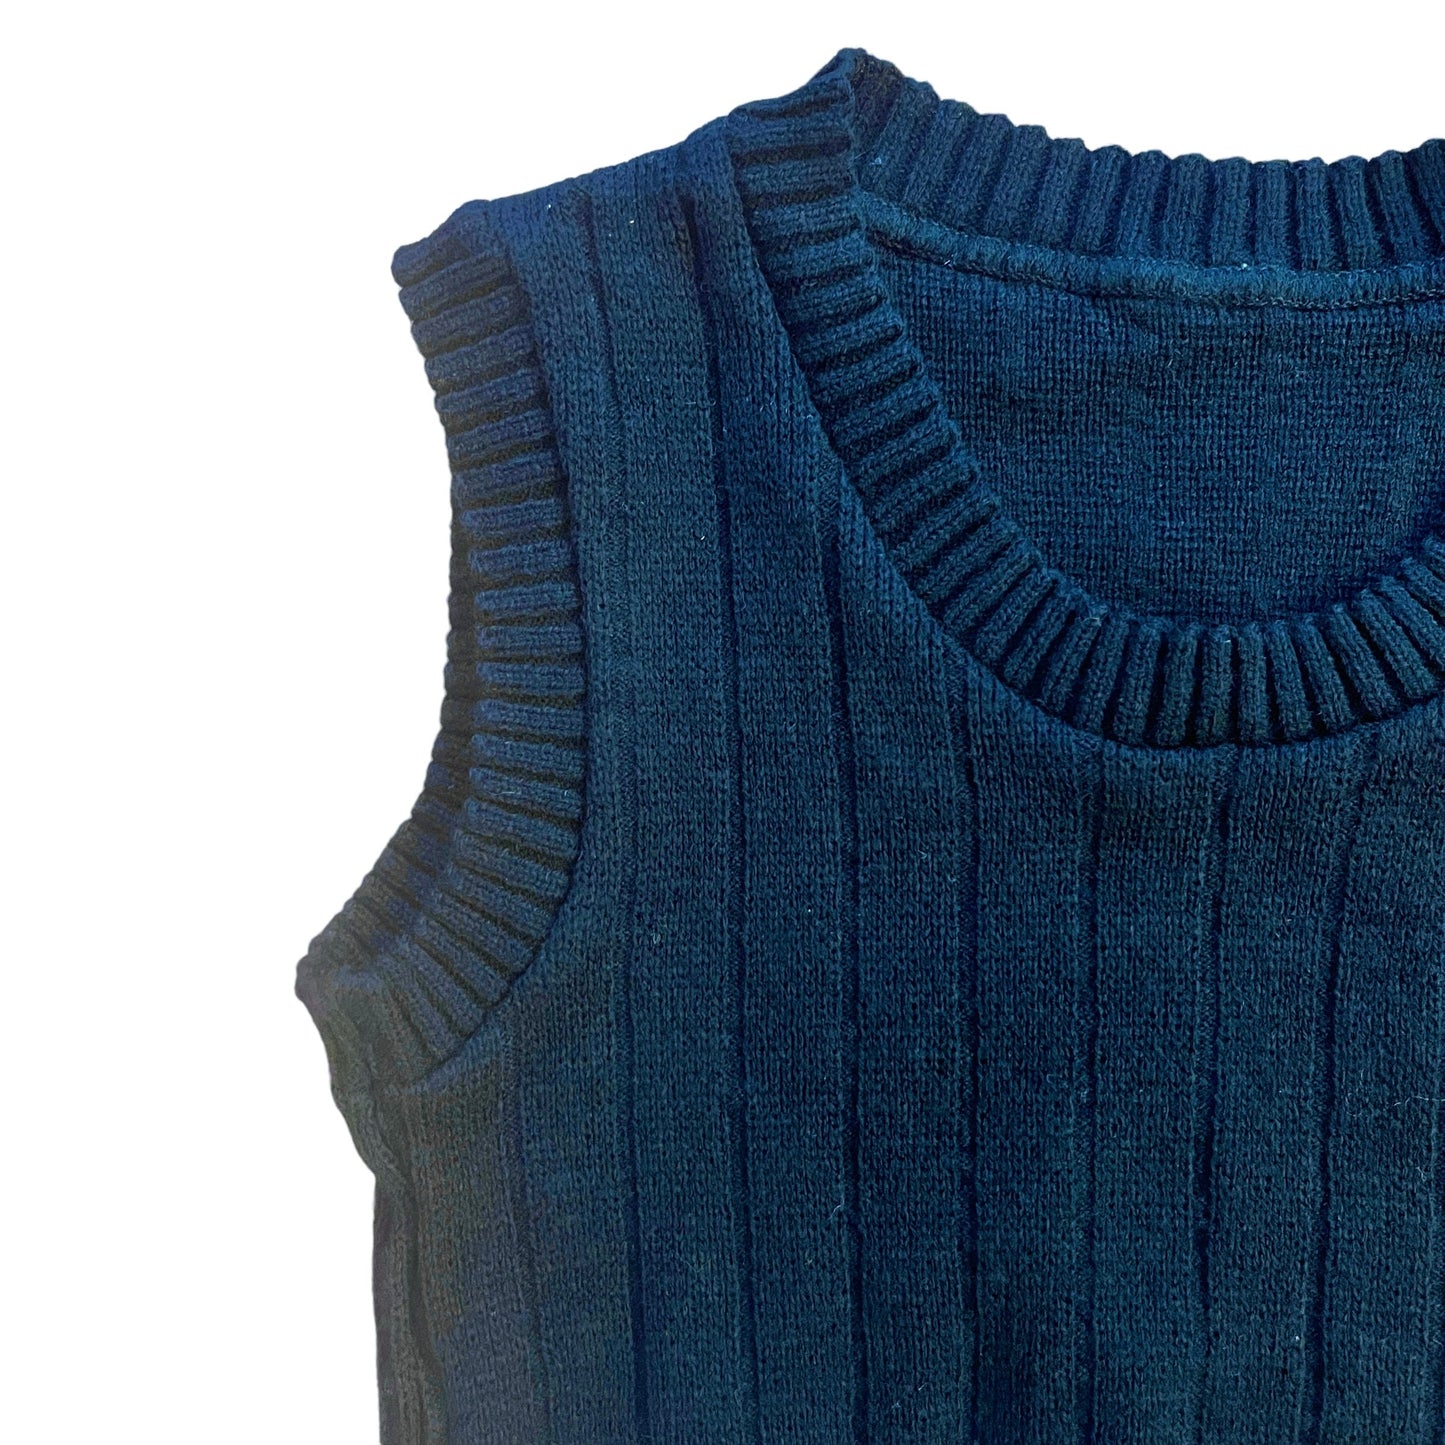 1970's Black Knitted Vest / 5-6Y